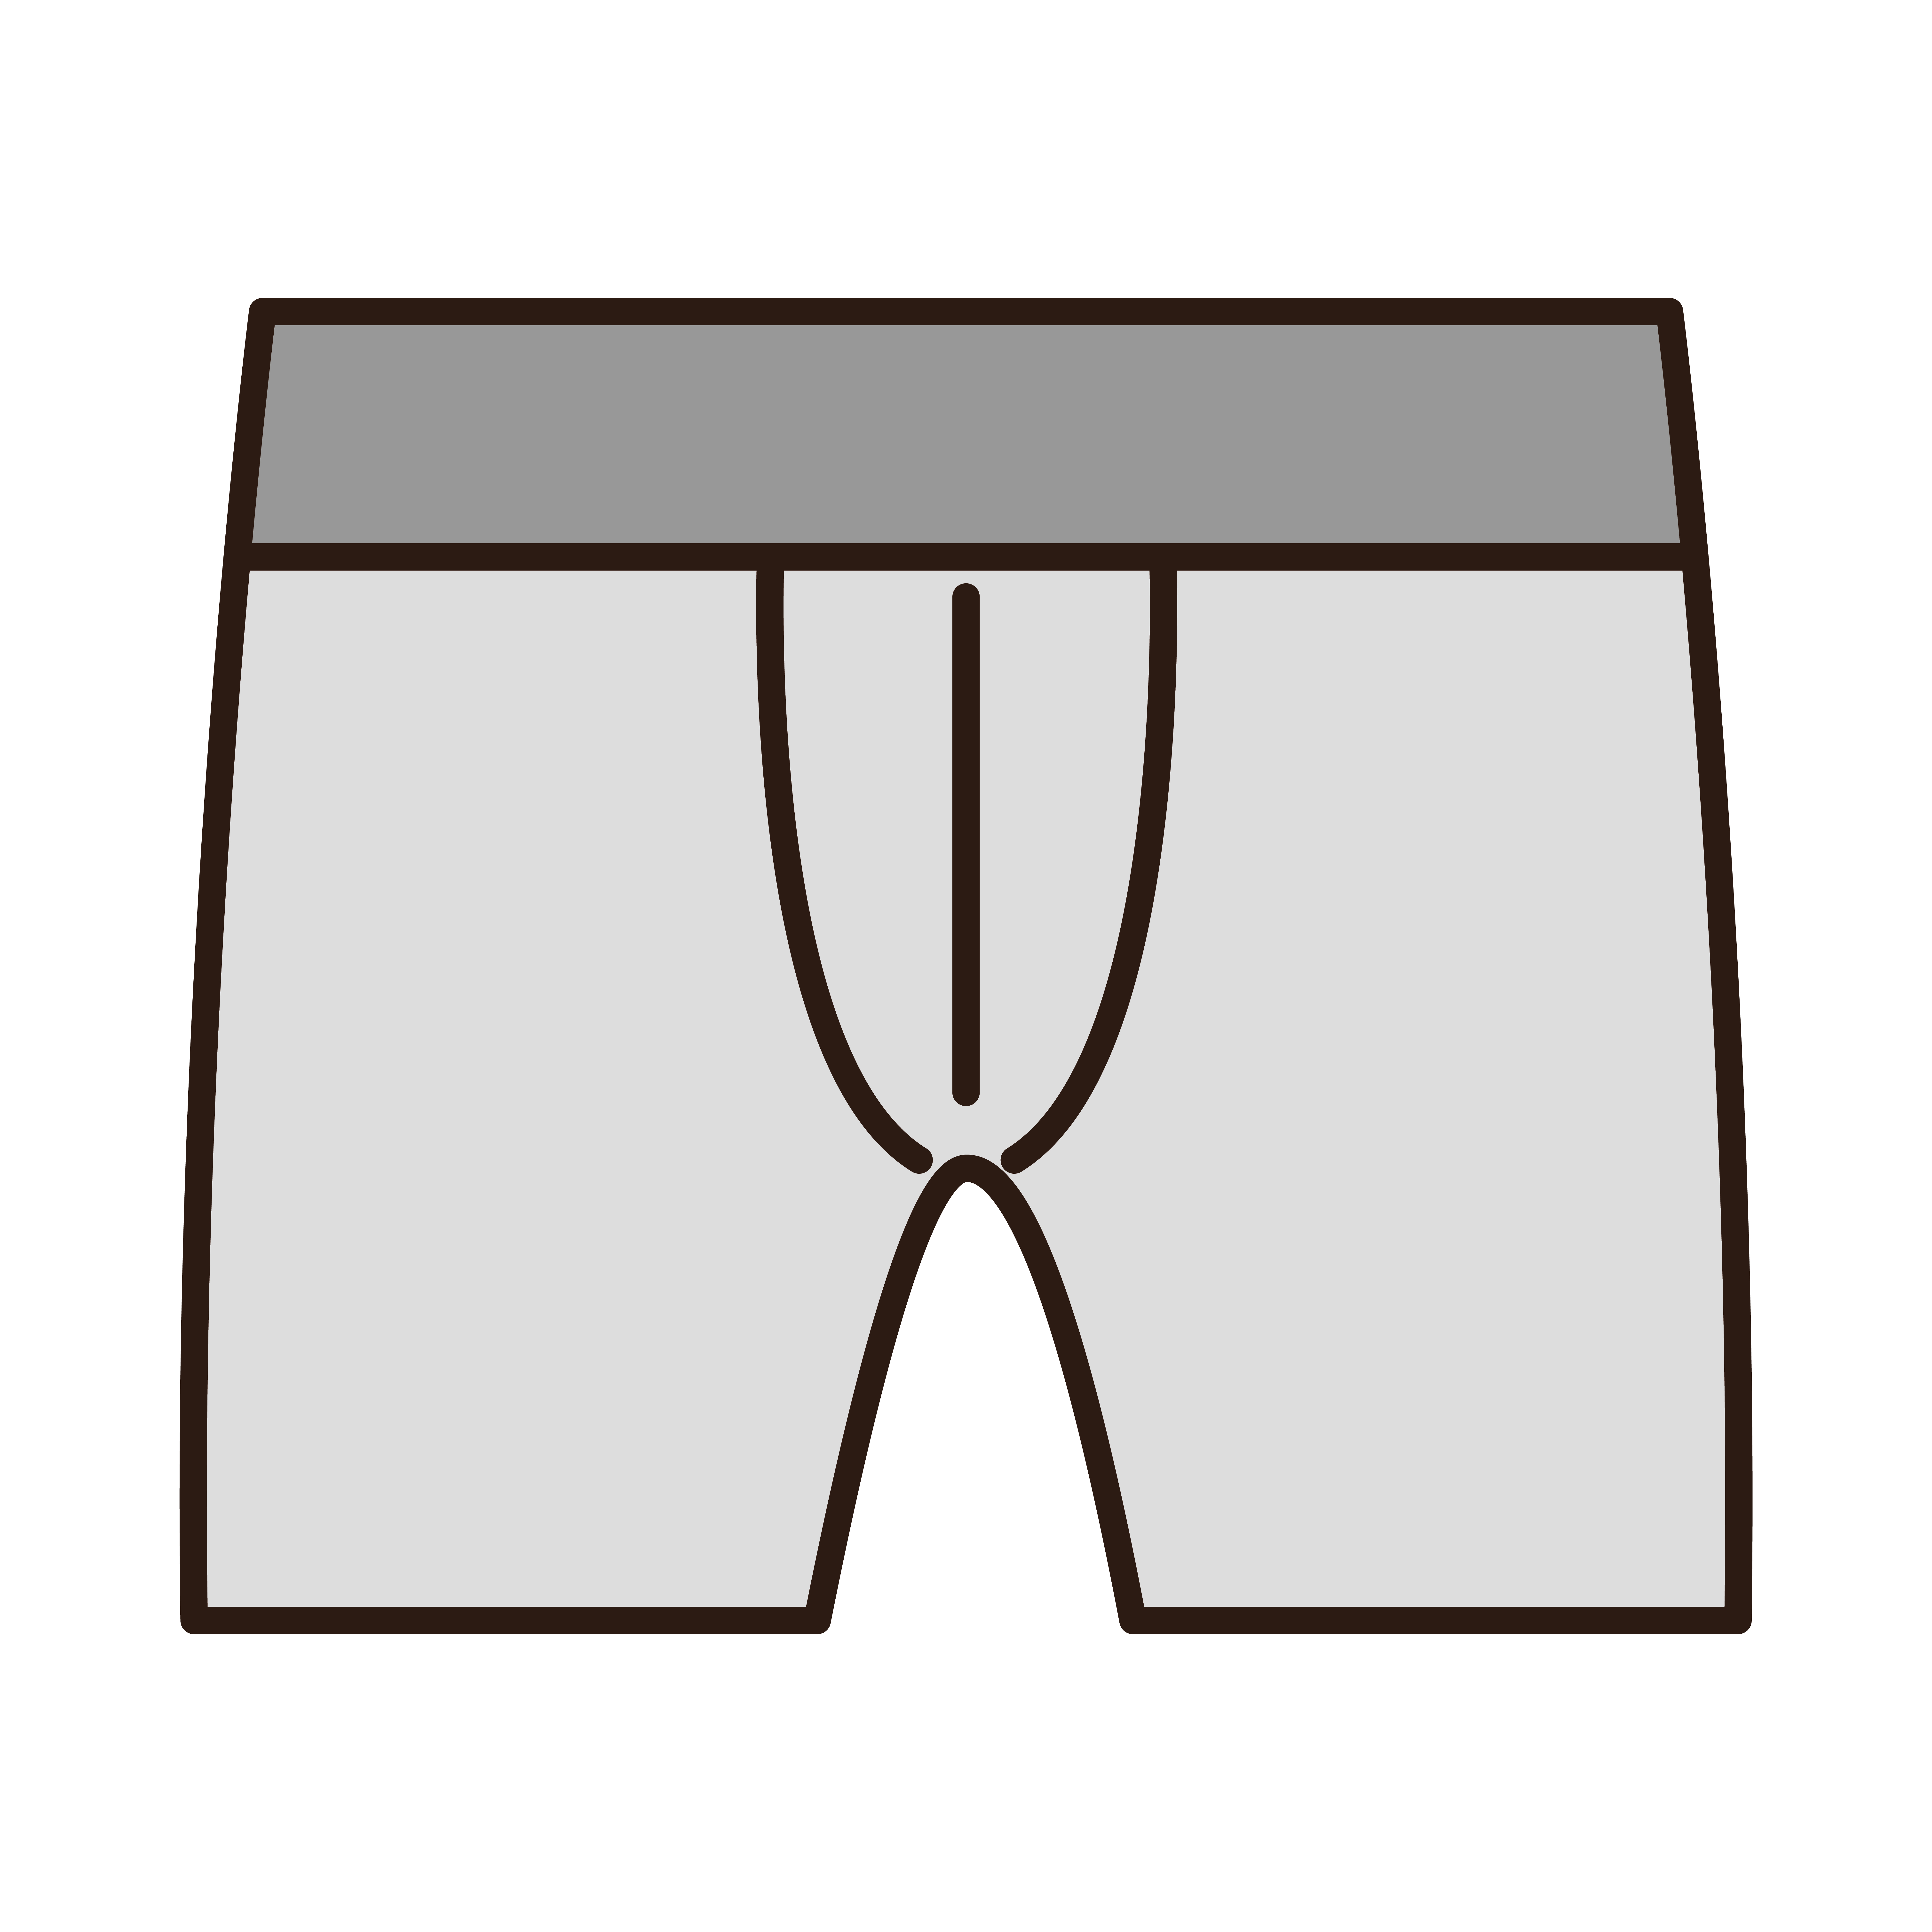 Underwear Line Icon Graphic by muhammadfaisal40 · Creative Fabrica